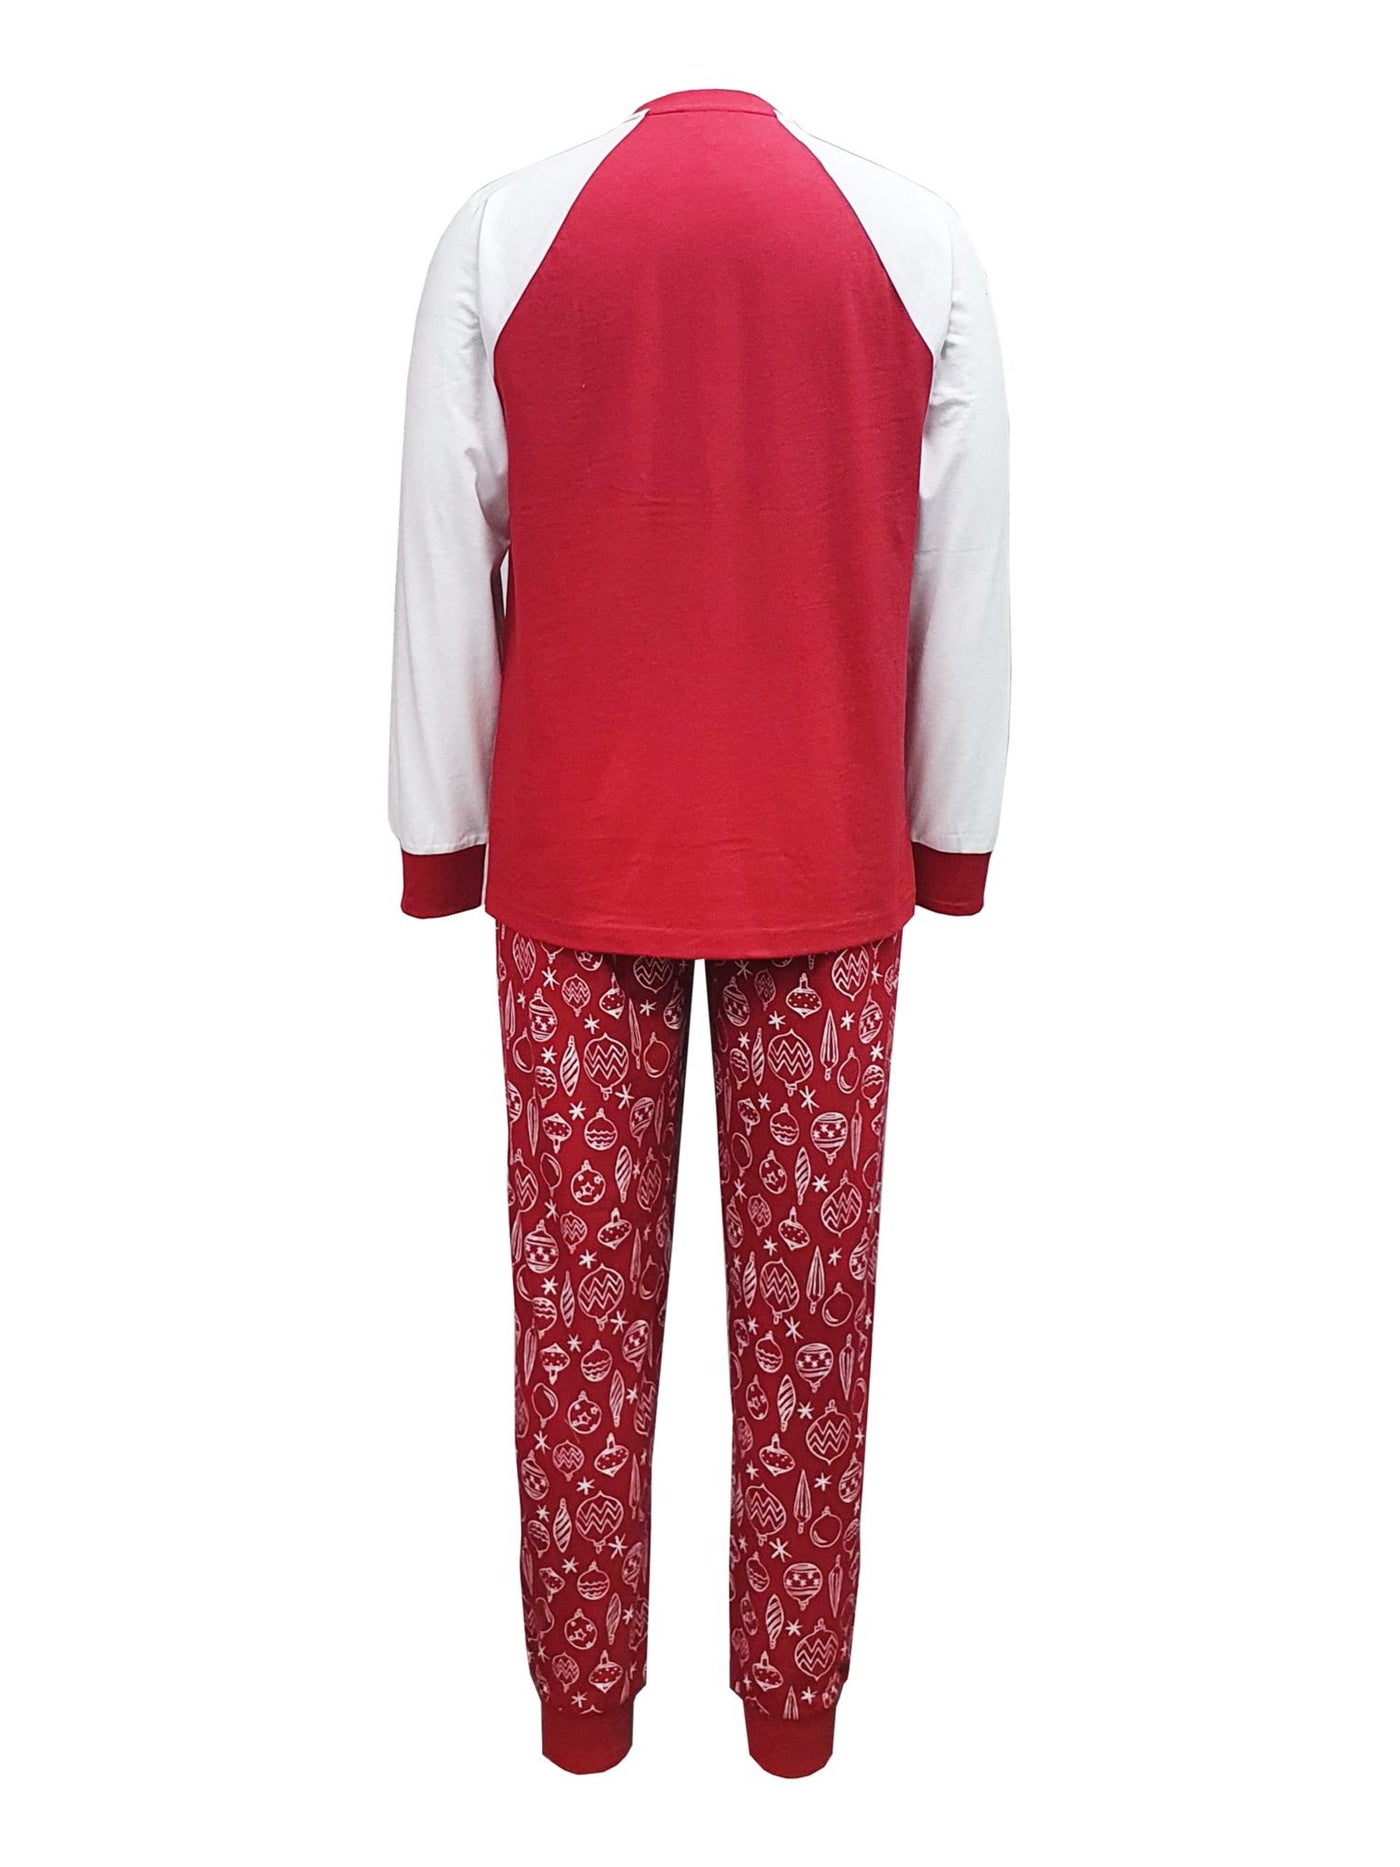 FAMILY PJs Mens Red Graphic Drawstring T-Shirt Top Cuffed Pants Pajamas XXL